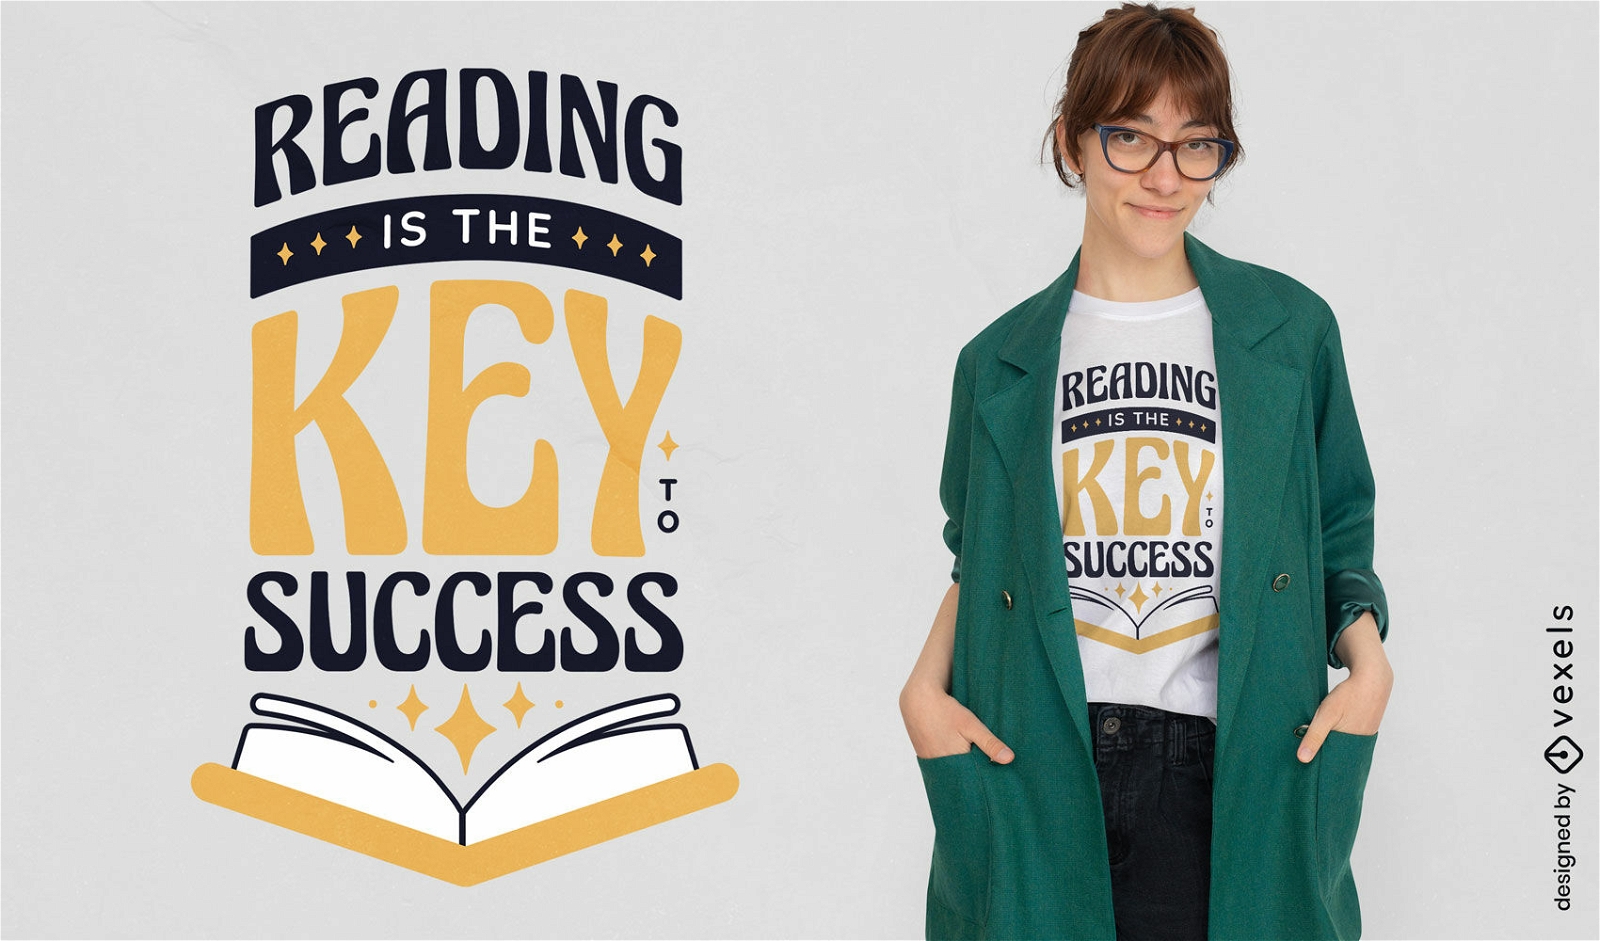 Reading key to success t-shirt design